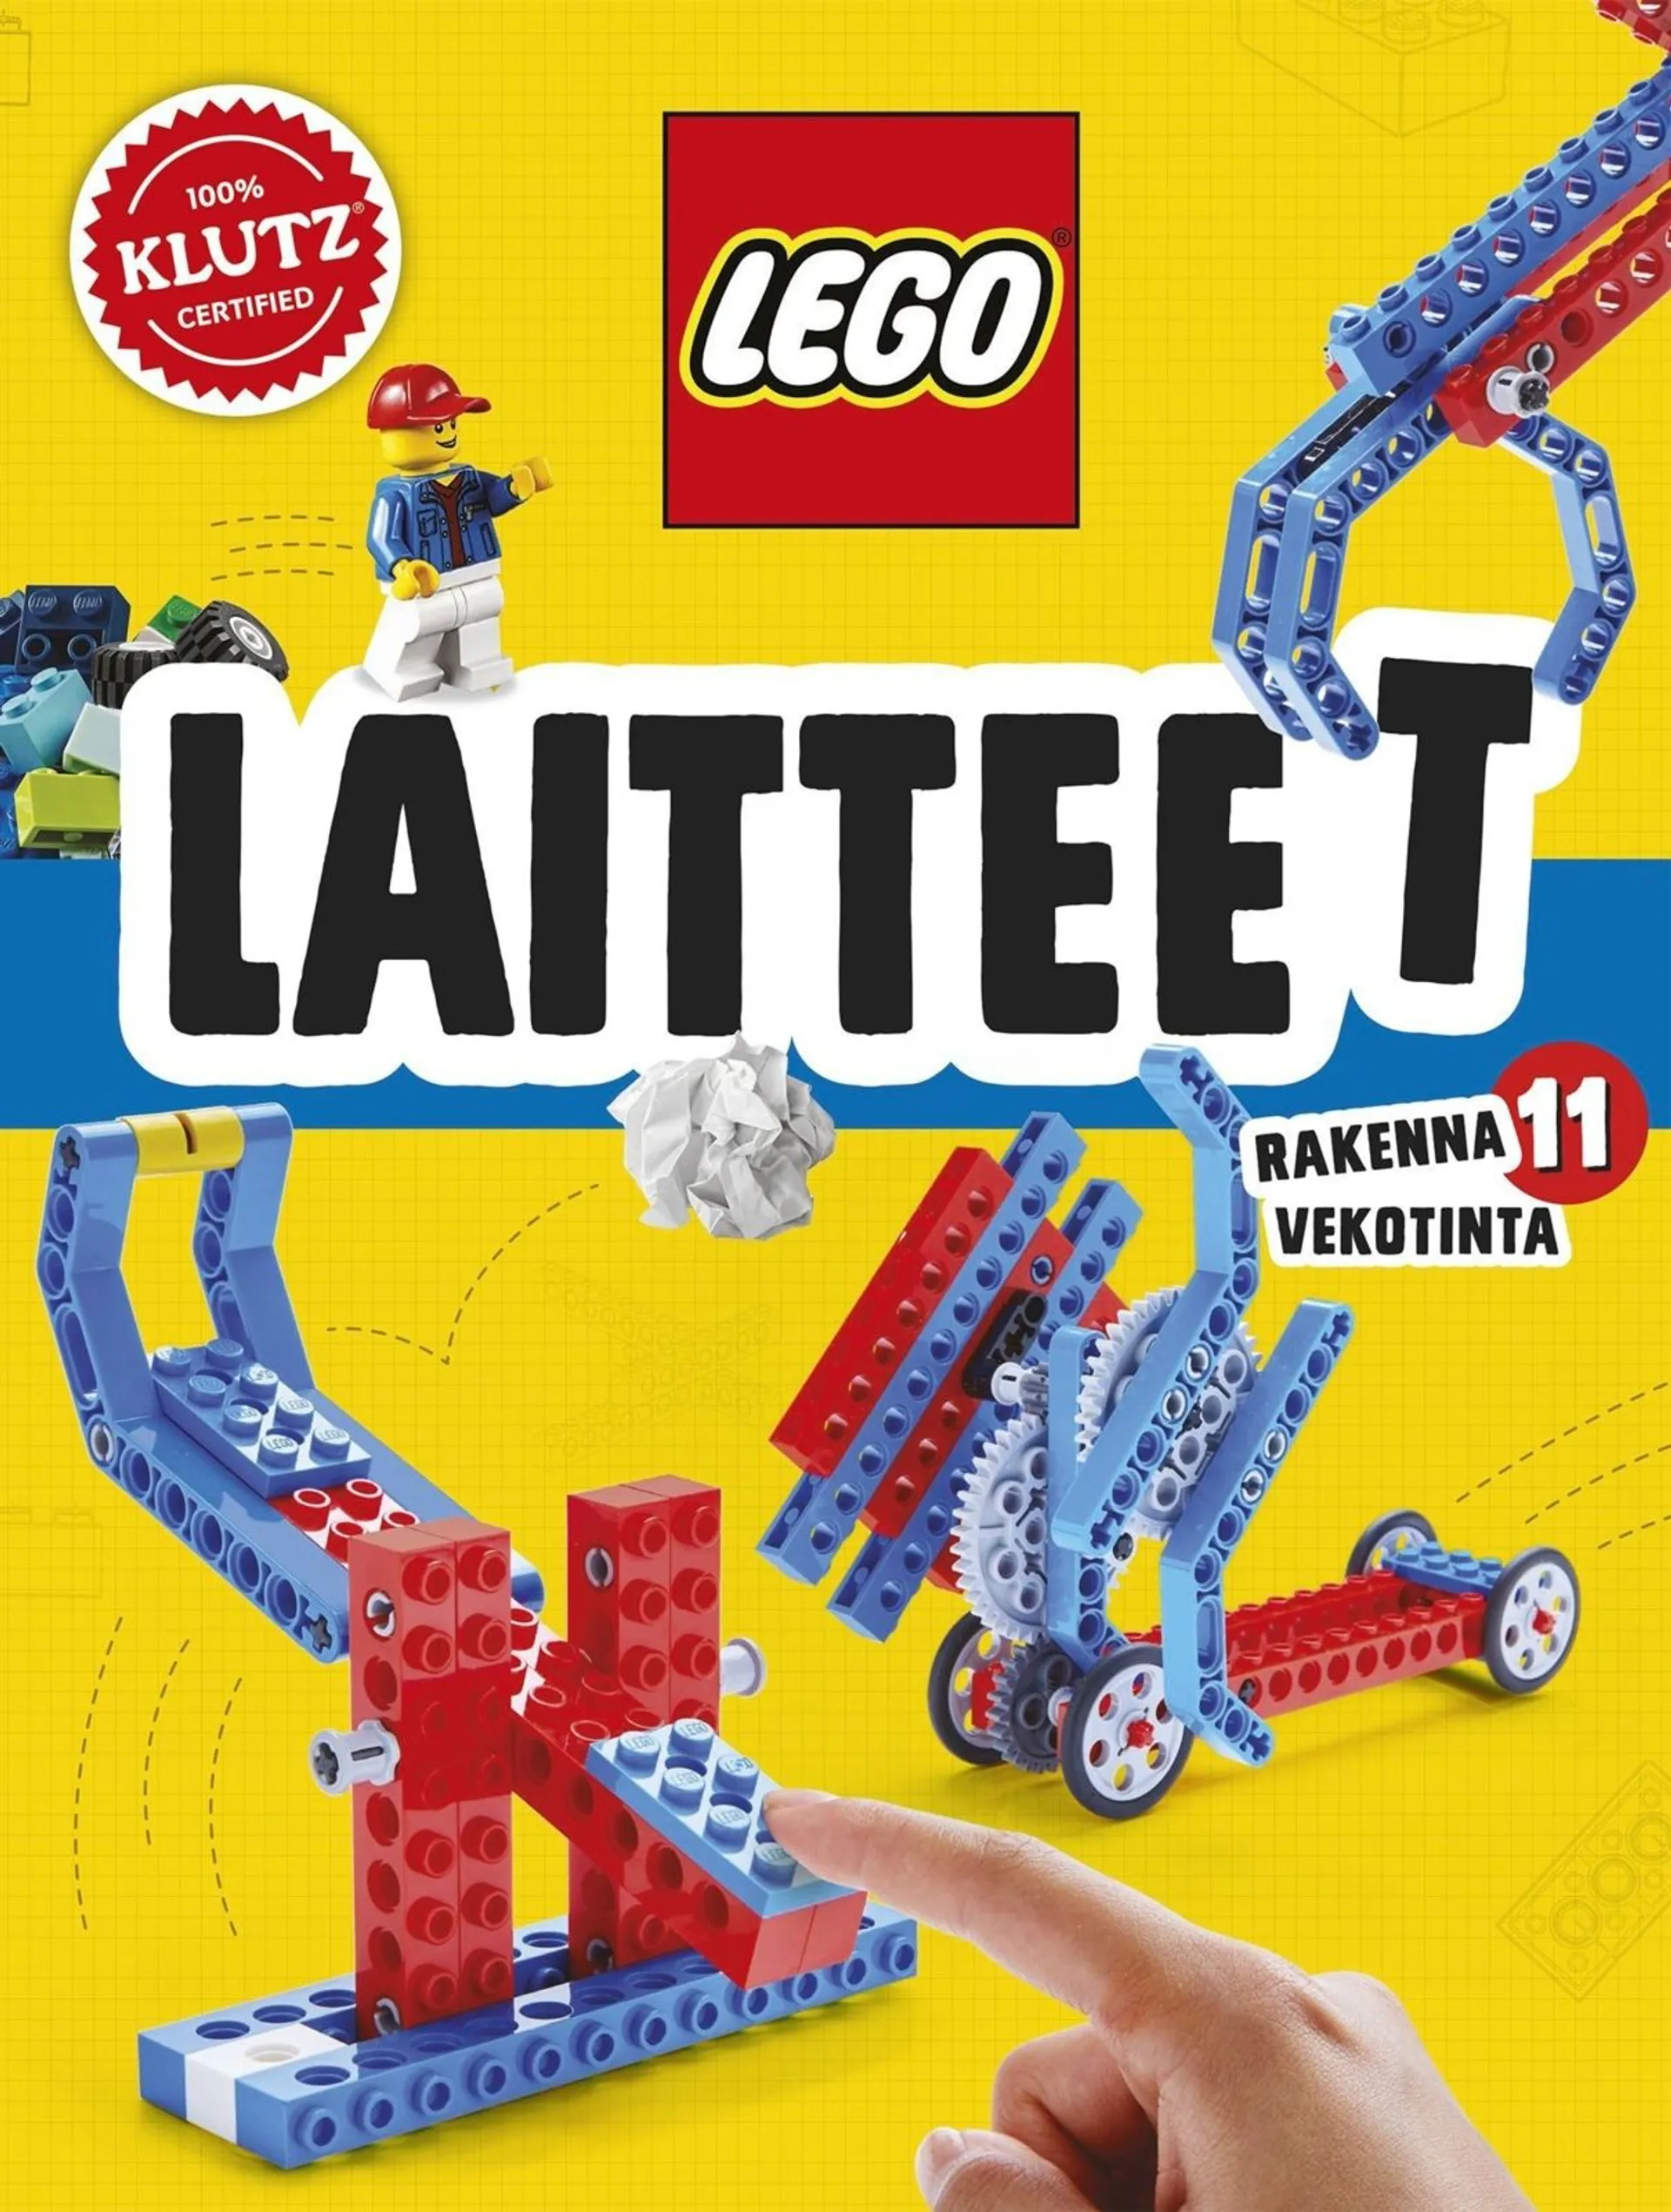 Lego Group, Lego-laitteet - Rakenna 11 vekotinta